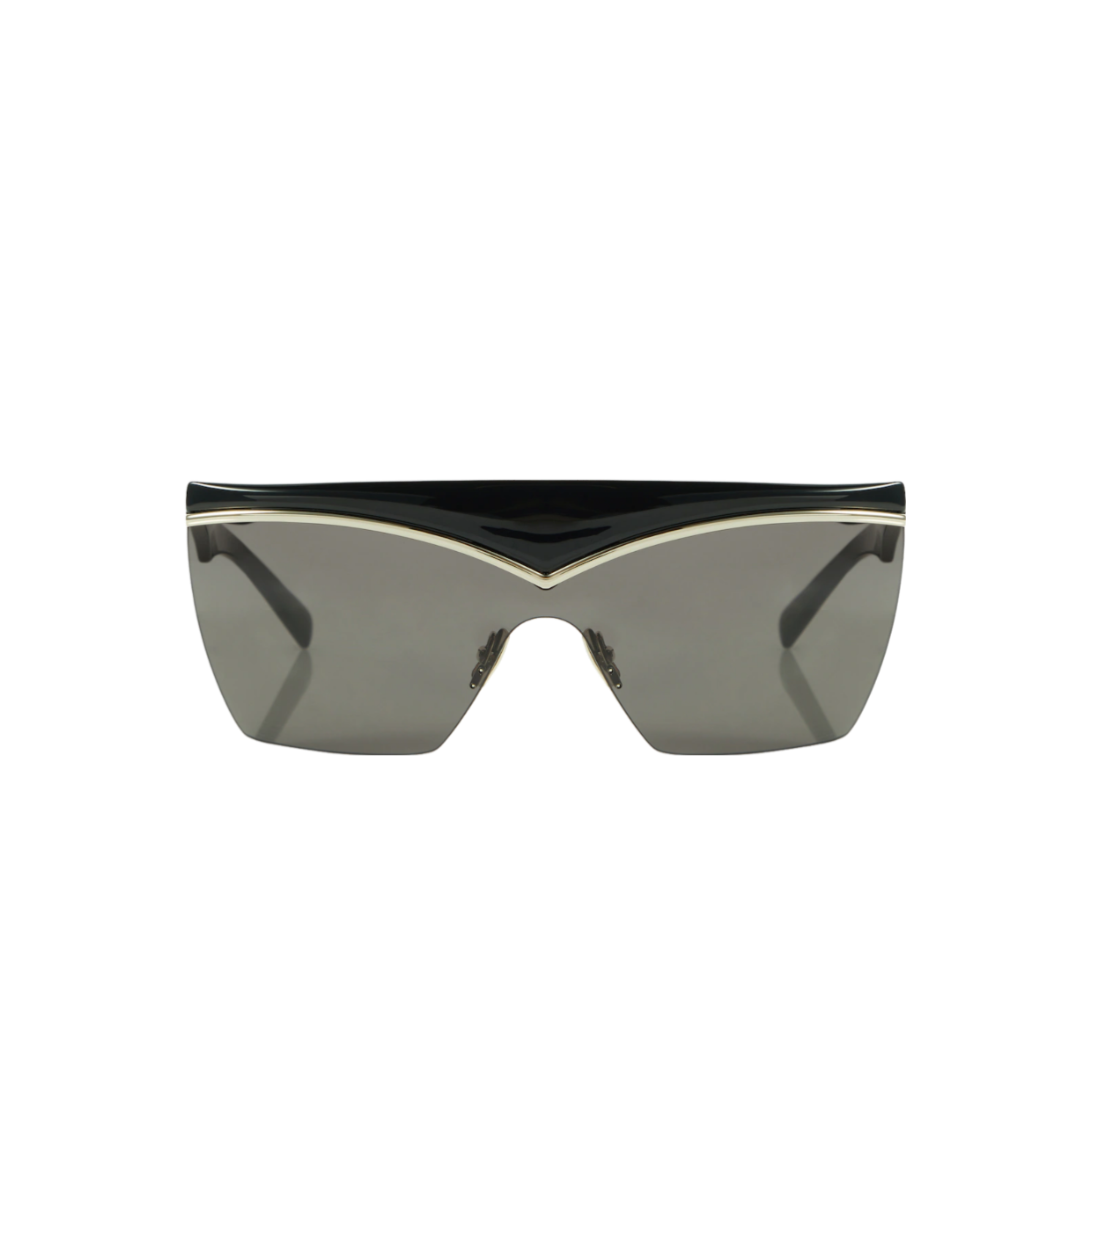 SL 614 Mask shield sunglasses